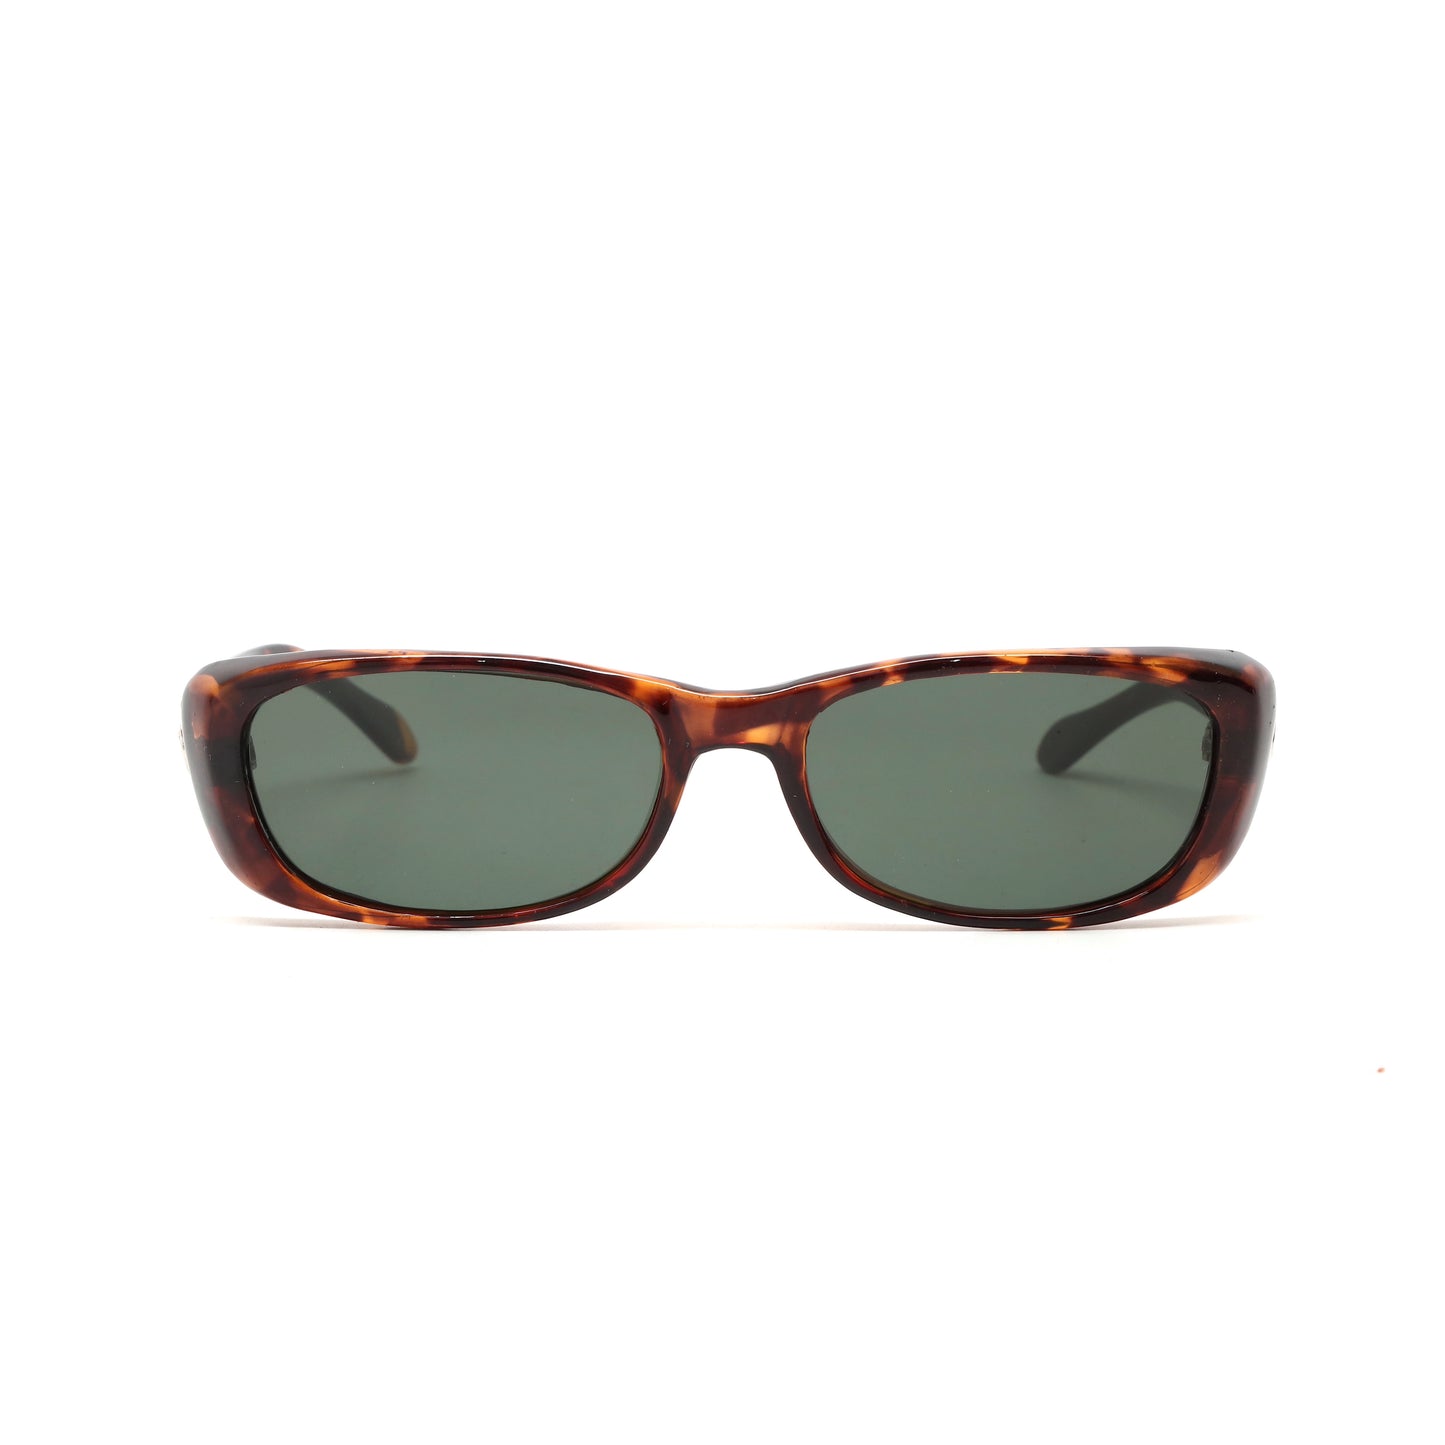 Vintage Small Sized 90s Mod Rectangle Sunglasses - Dark Tortoise